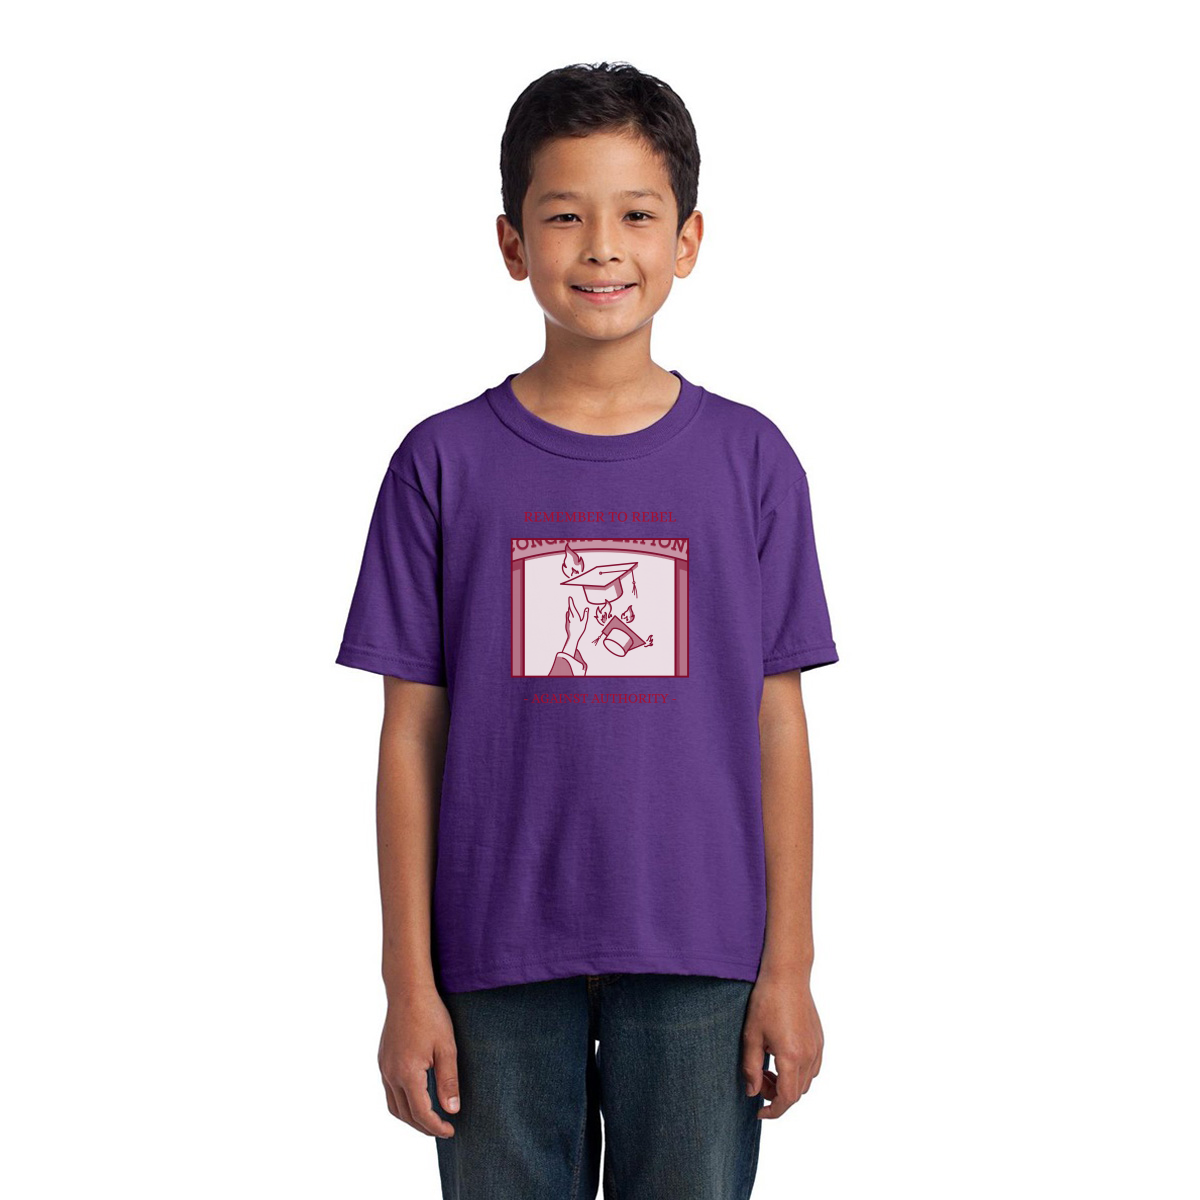 Remember To Rebel Agaist Authority Kids T-shirt | Purple